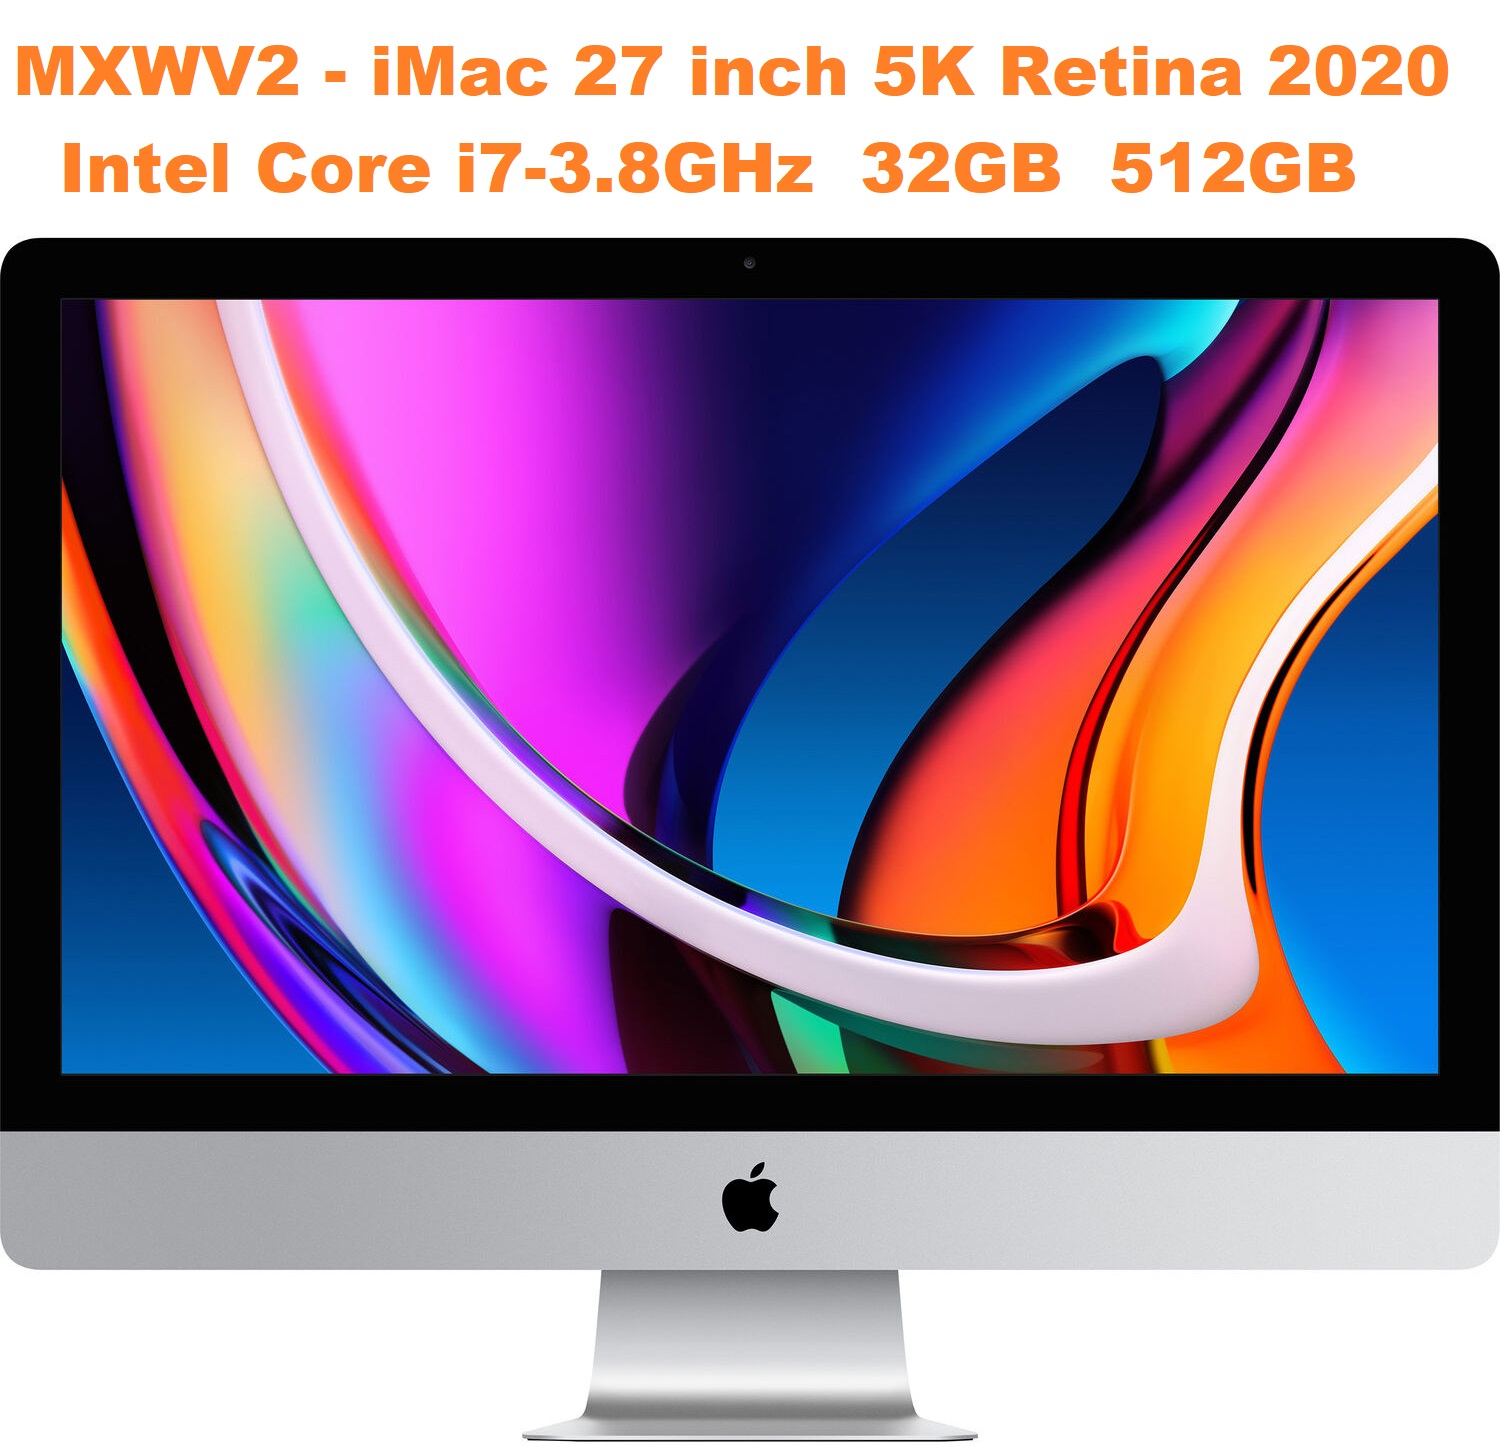 MXWV2 - iMac 27 inch 5K Retina 2020 - Intel Core i7-3.8GHz  32GB  512GB